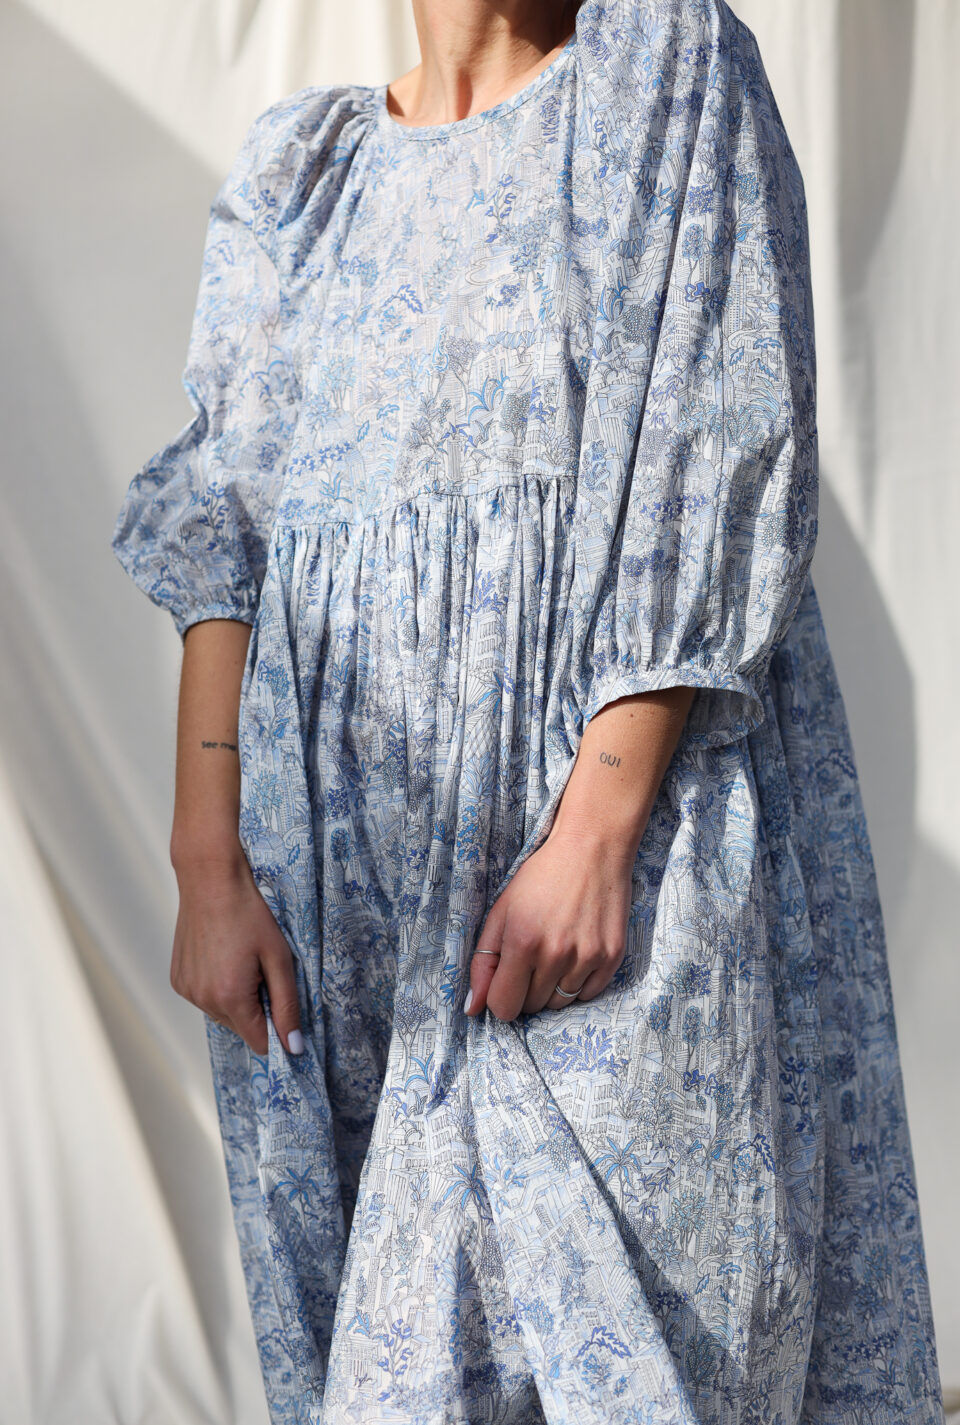 Reversible oversized printed summer dress PLANTOPOLIS | Dress | Sustainable clothing | OffOn clothing